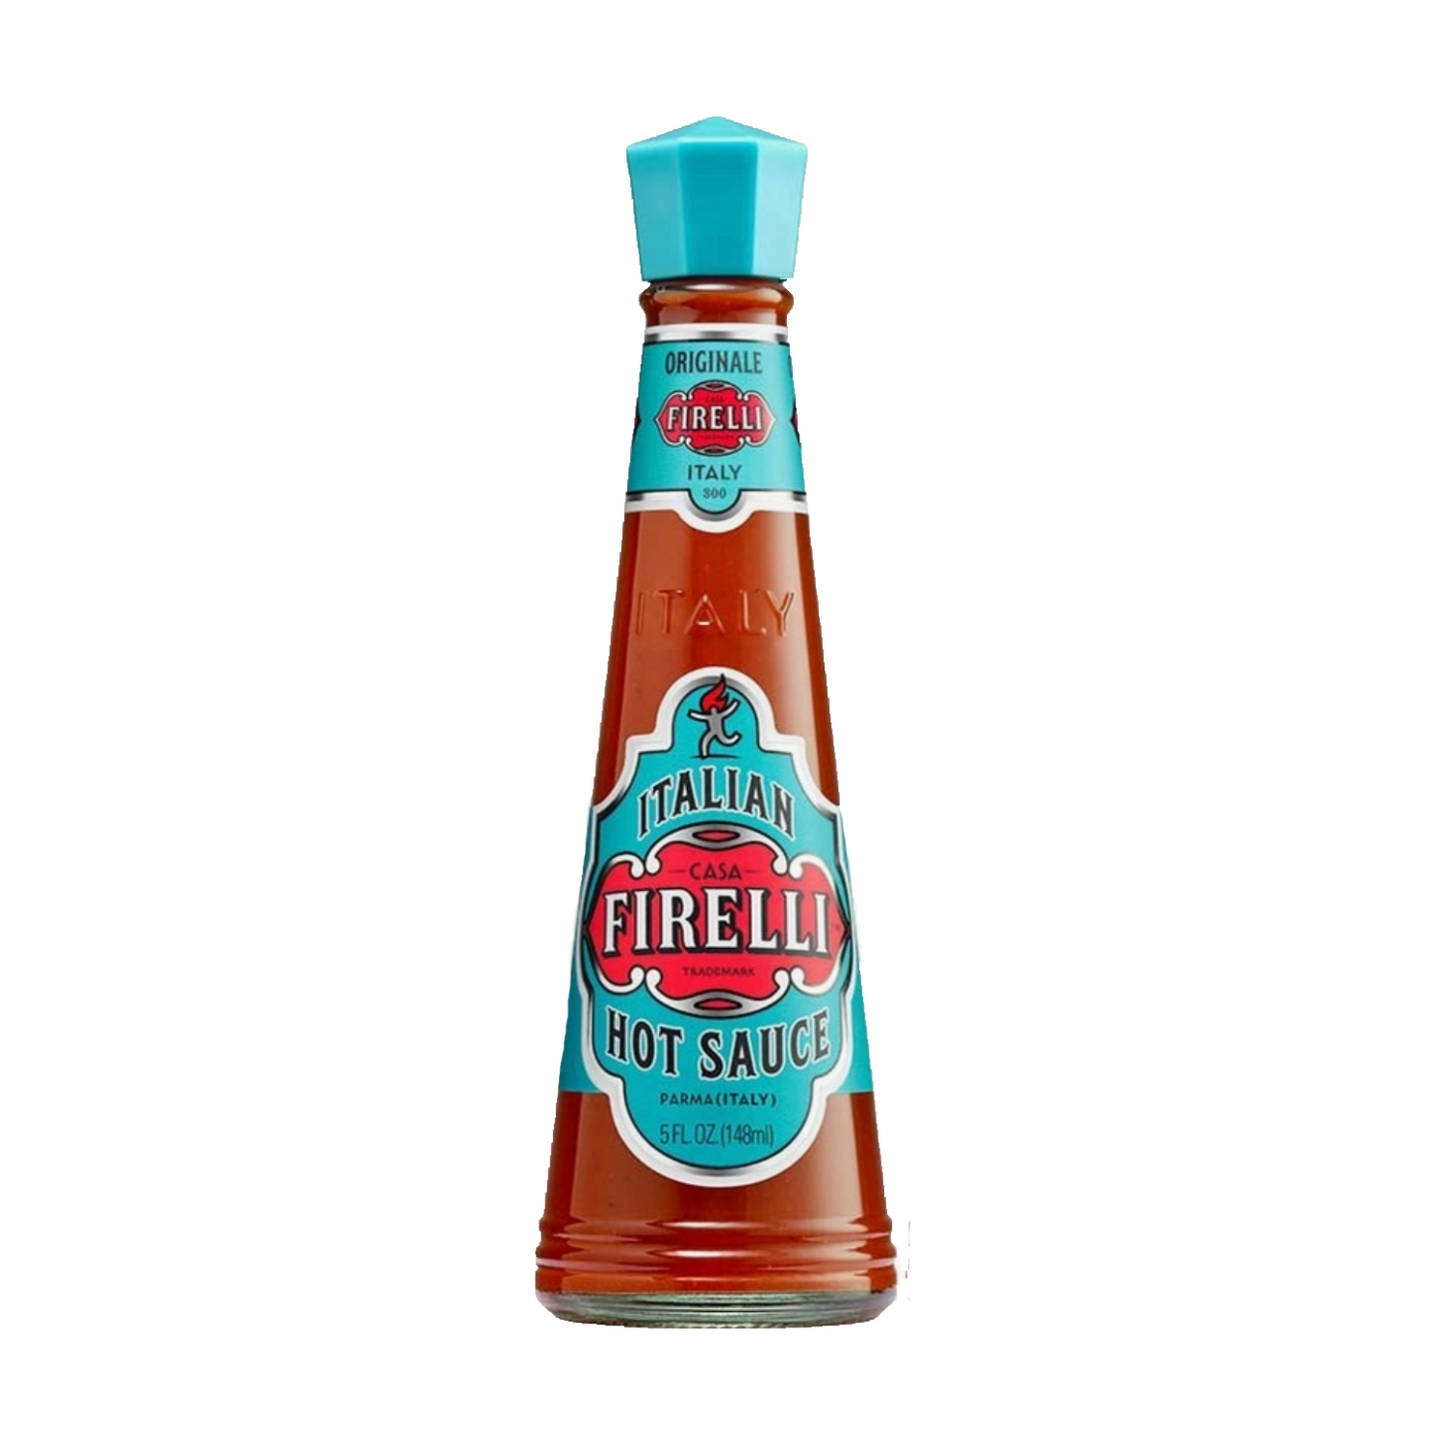 Originale Italian Hot Sauce by Firelli Hot Sauce